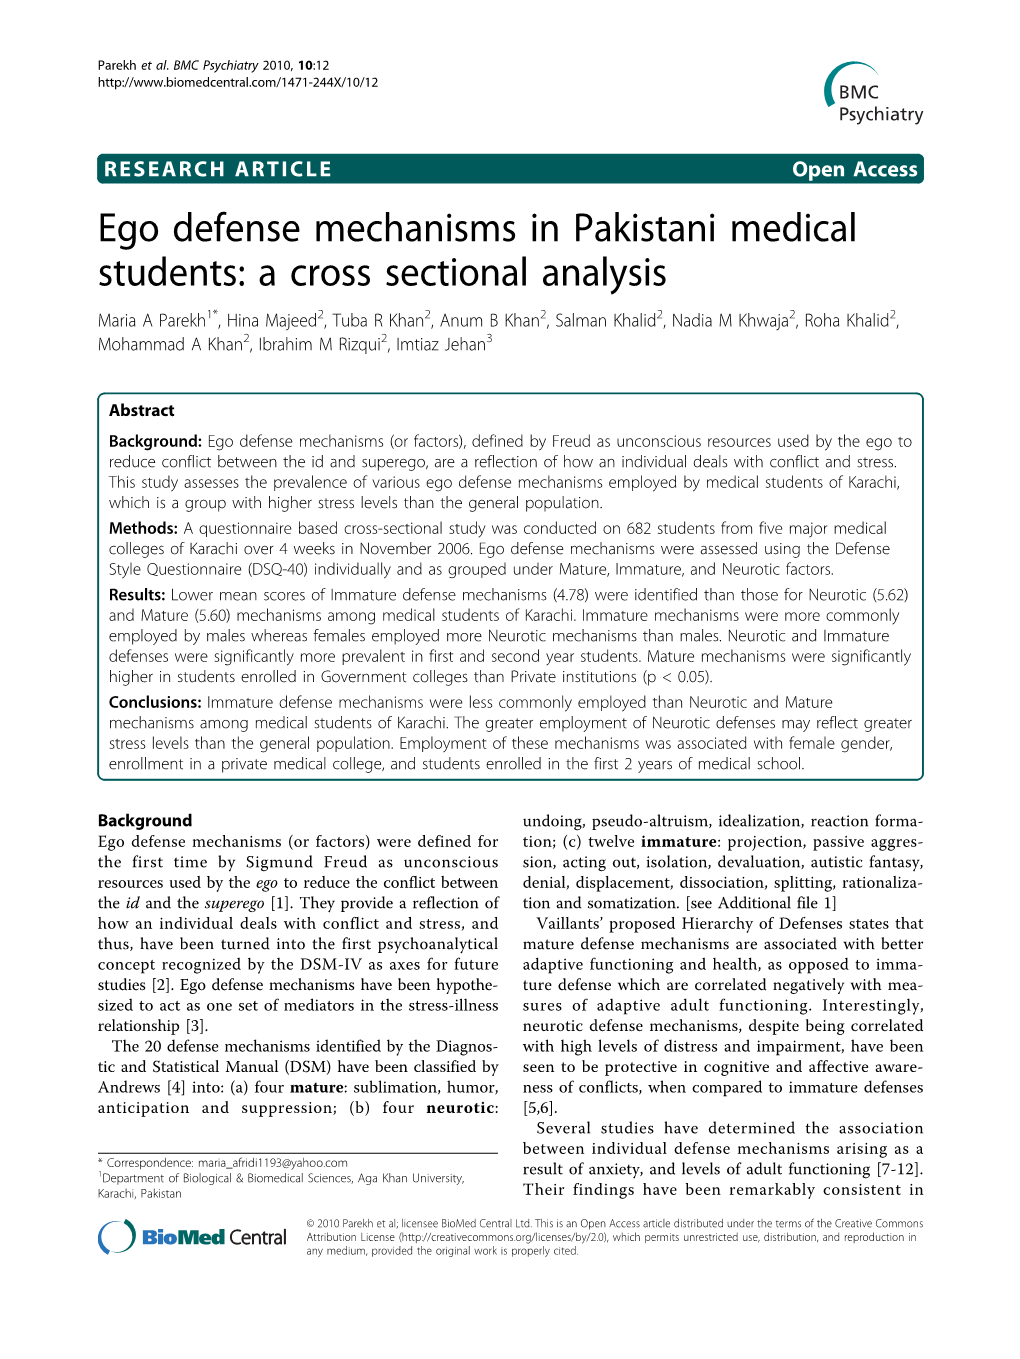 Ego Defense Mechanisms in Pakistani Medical Students